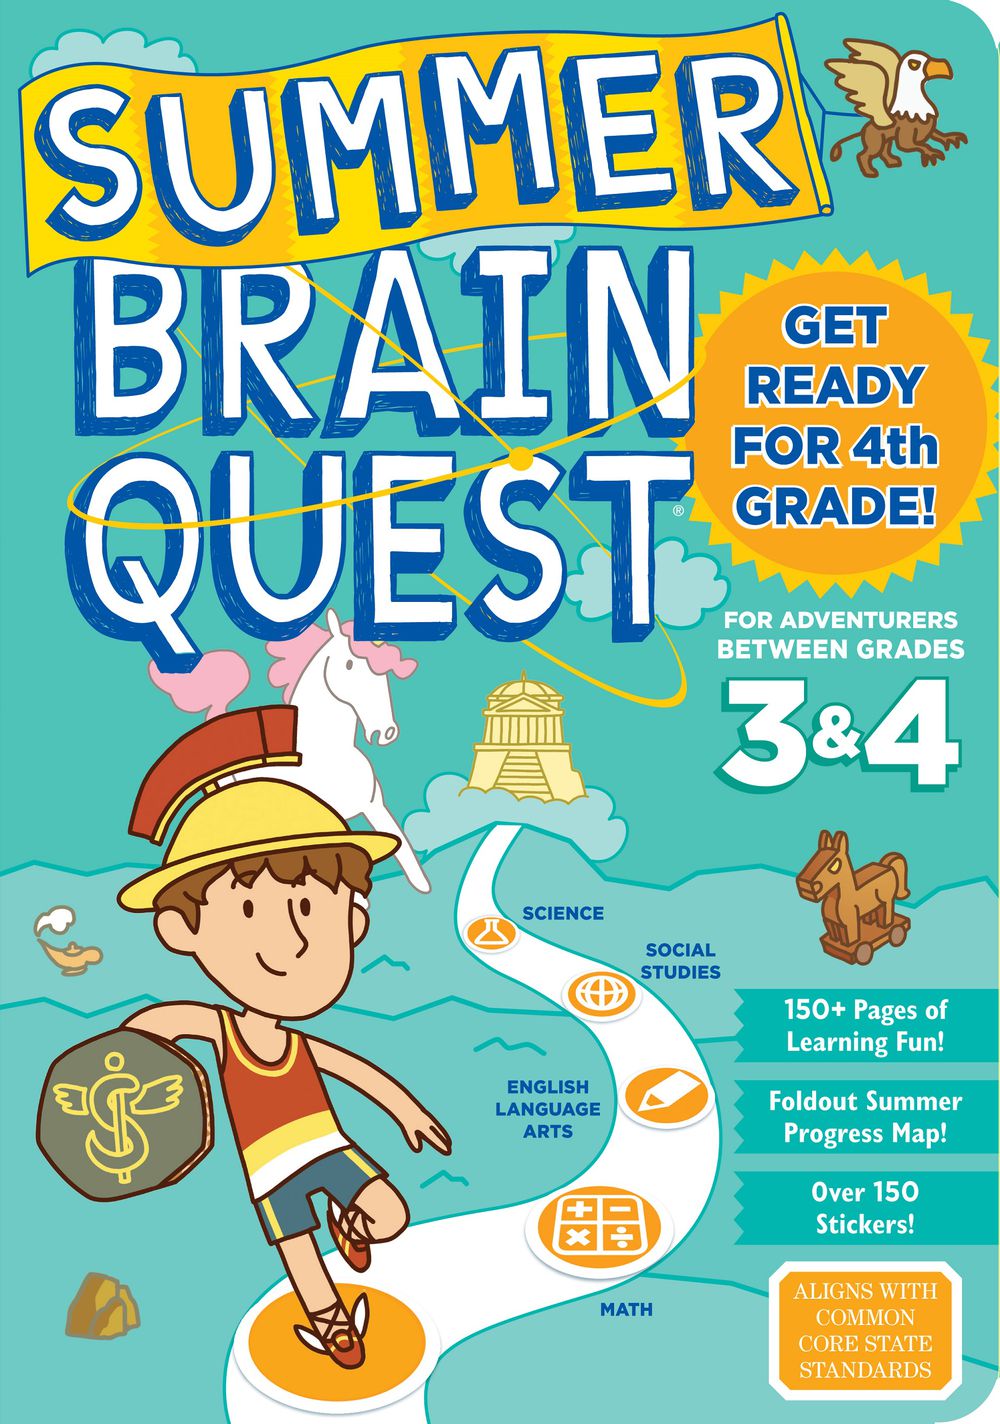 Summer Brain Quest－Between Grades 3 & 4